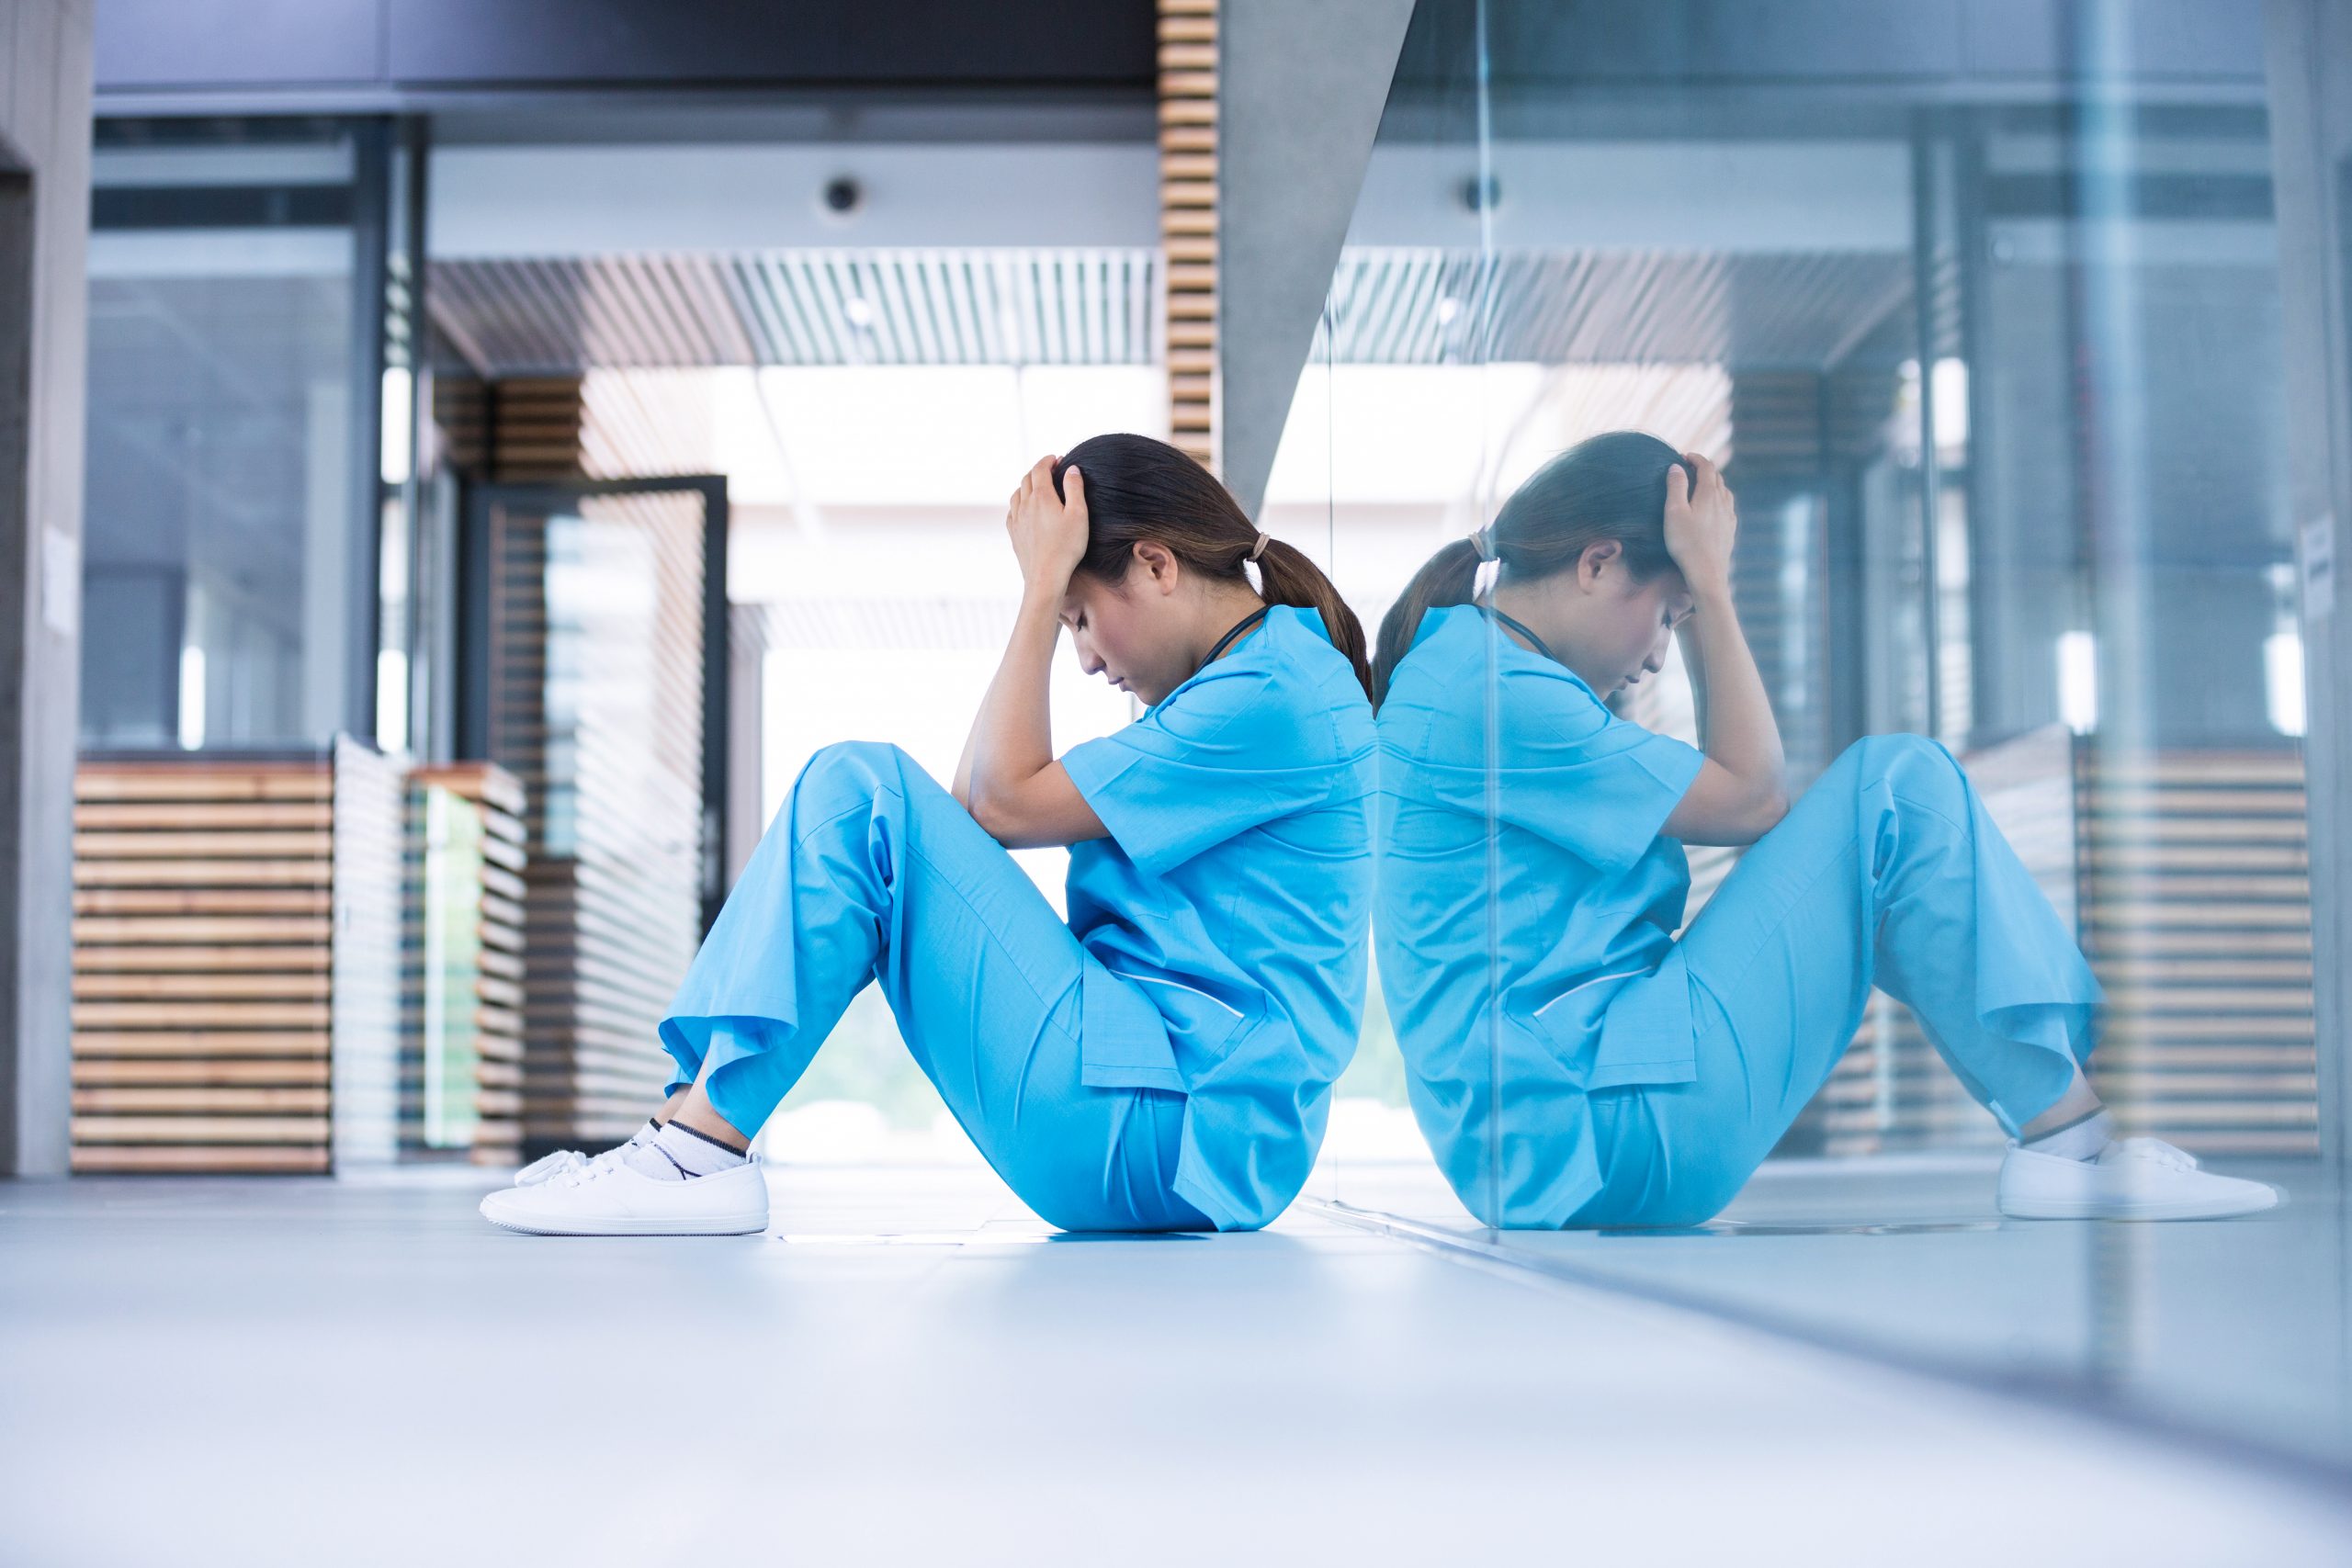 Tips to reduce nurse burnout